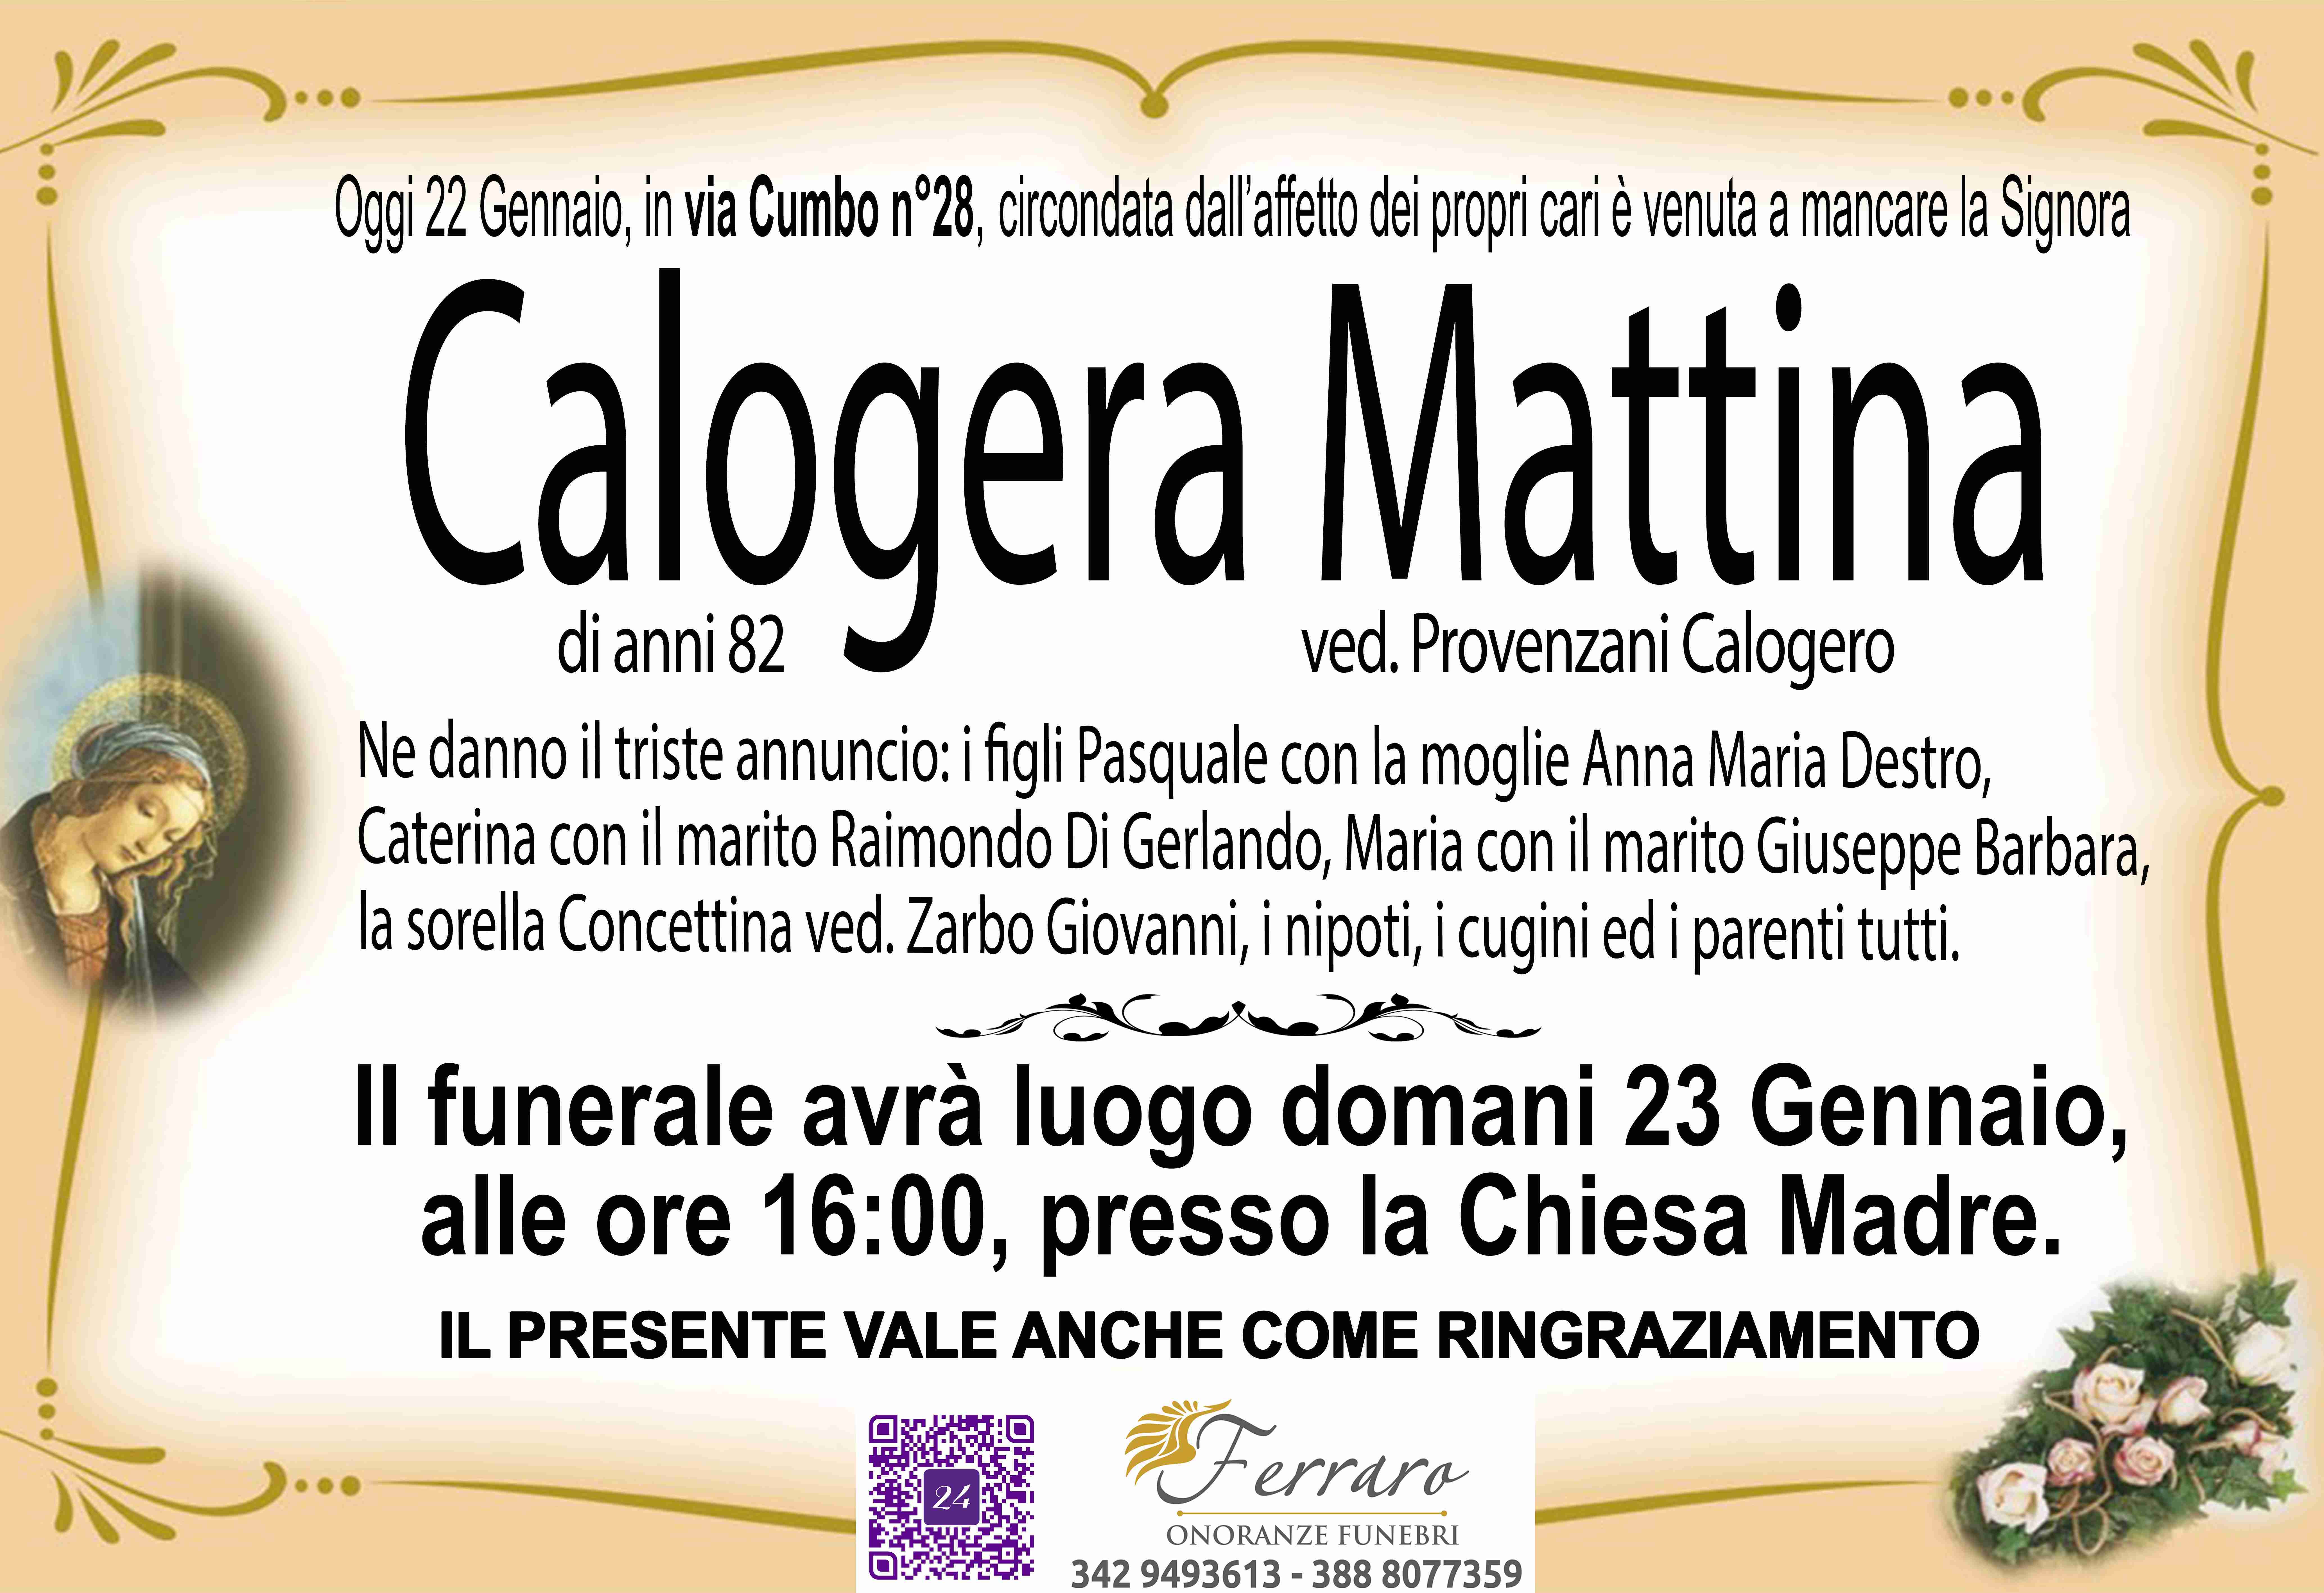 Mattina Calogera